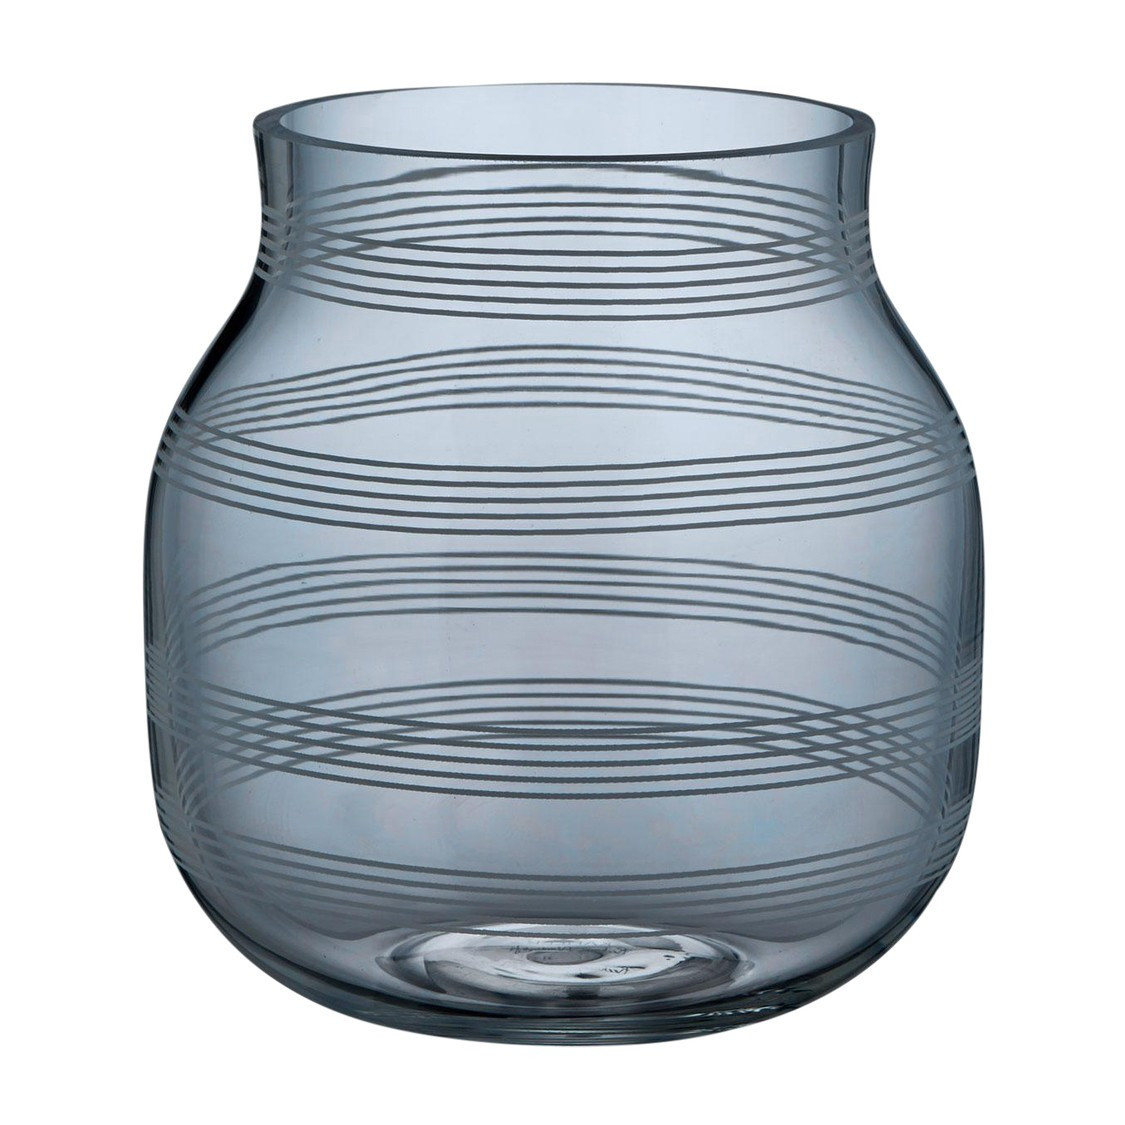 colored glass vases and bowls of ka¤hler omaggio glass vase h 17cm ambientedirect regarding omaggio glass vase h 17cm